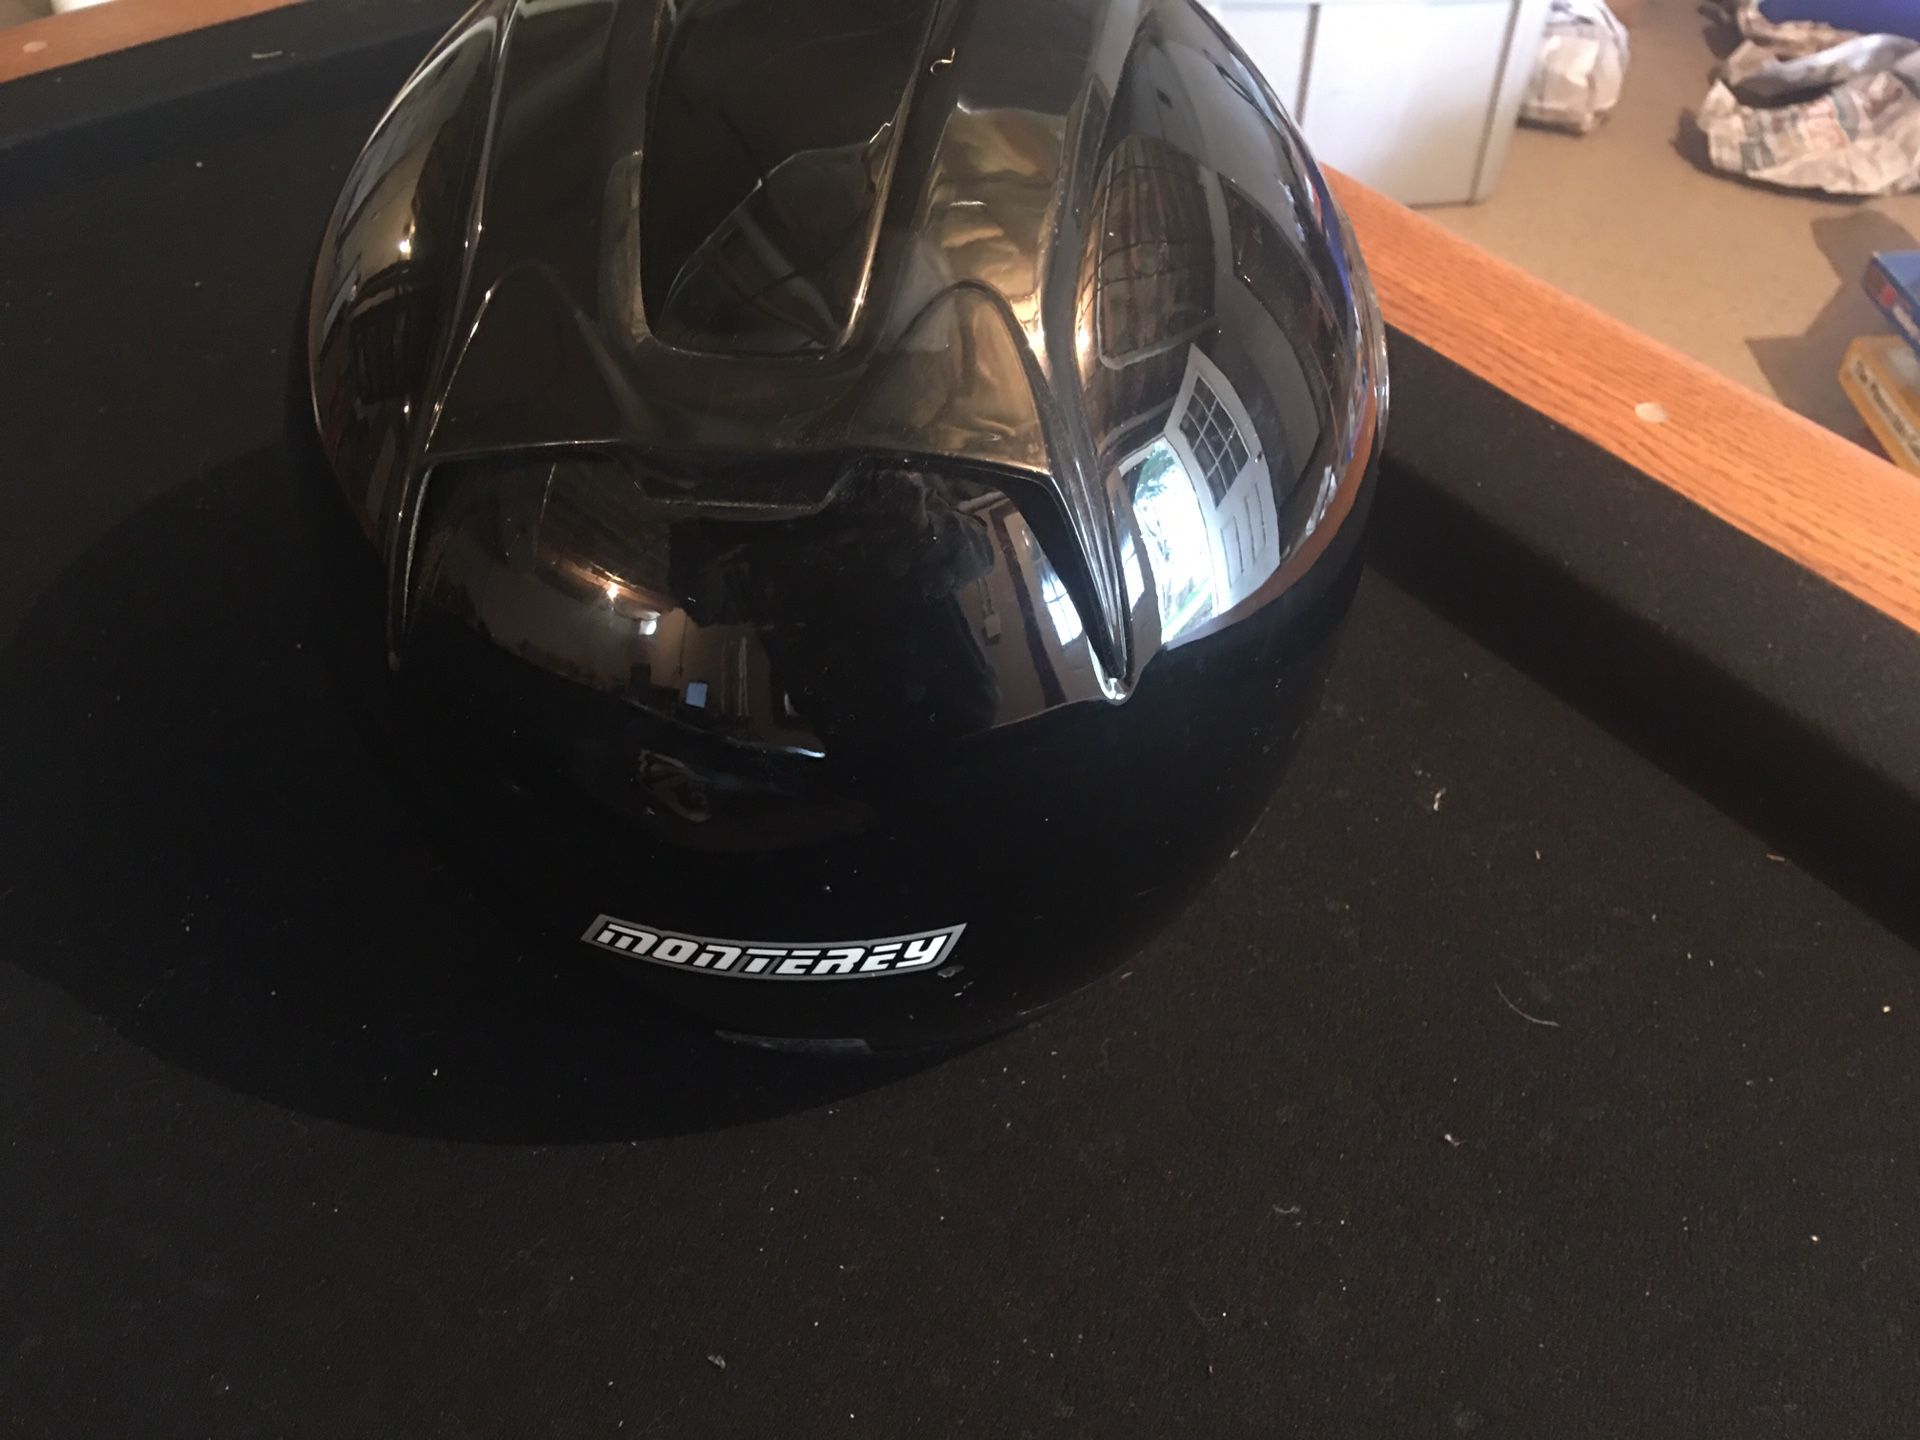 Vega Monterey Motorcycle Helmet